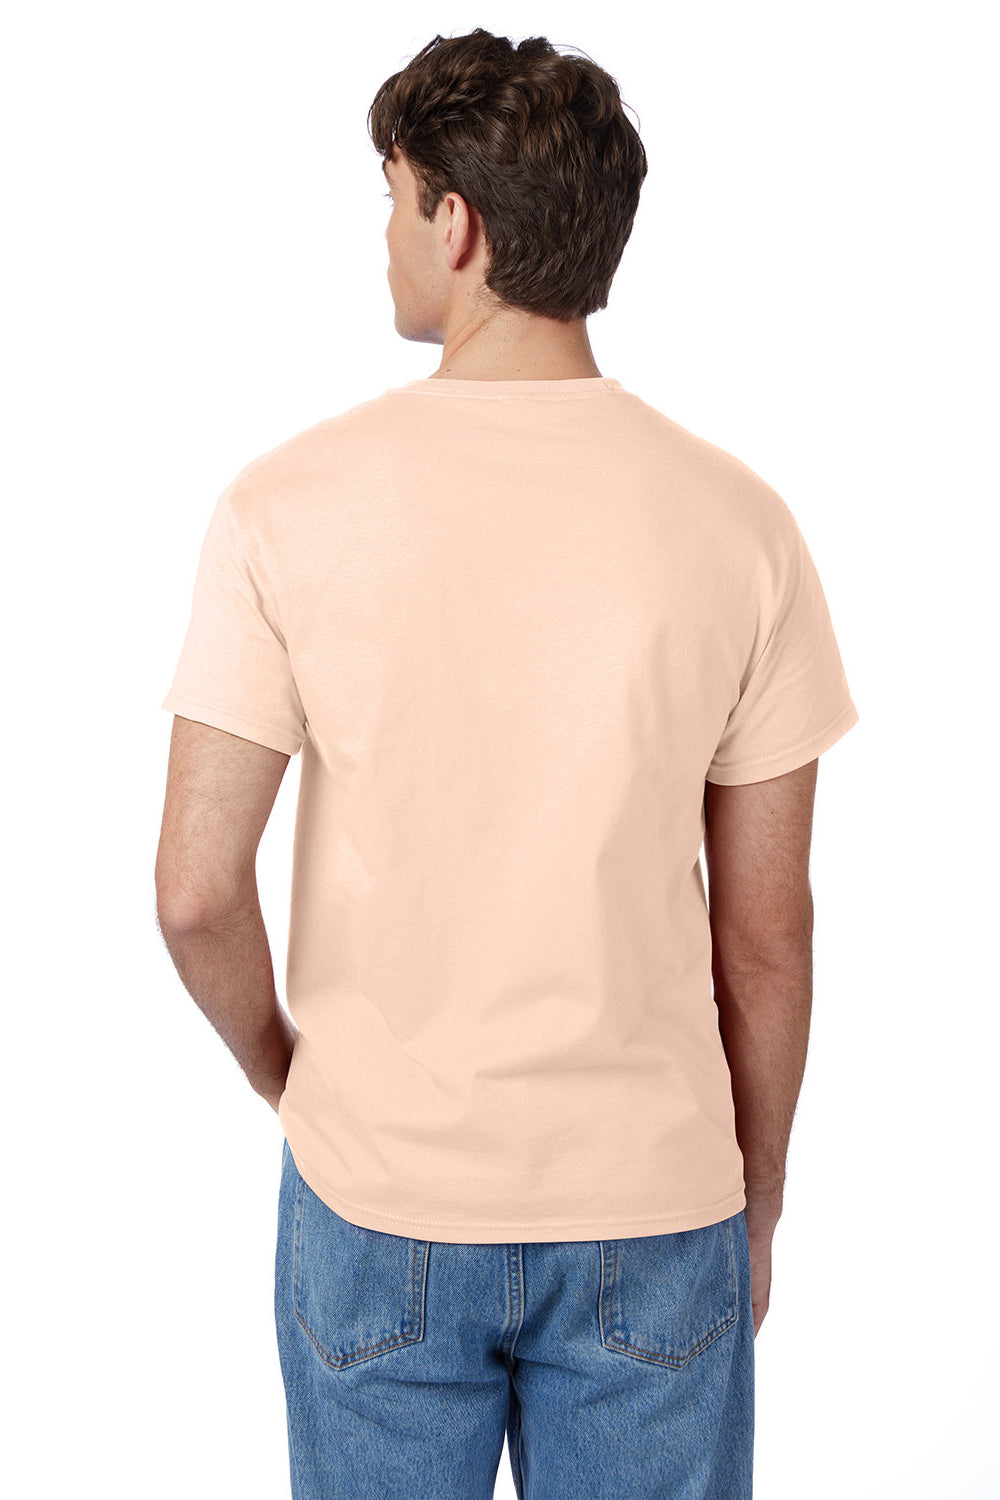 Hanes 5250/5250T Mens ComfortSoft Short Sleeve Crewneck T-Shirt Candy Orange Back